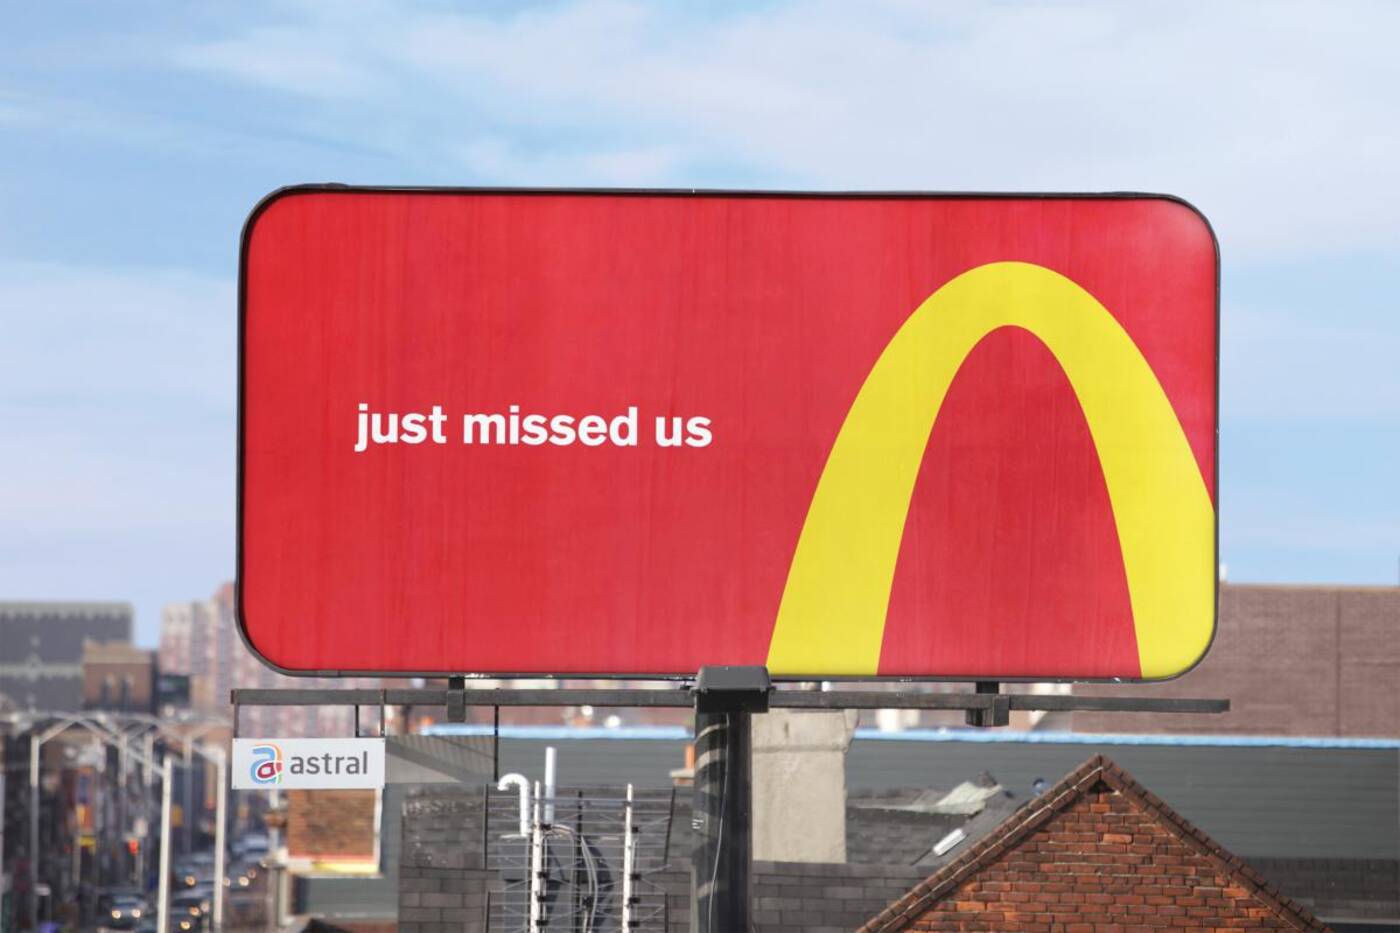 McDonald's billboards in Toronto getting worldwide attention